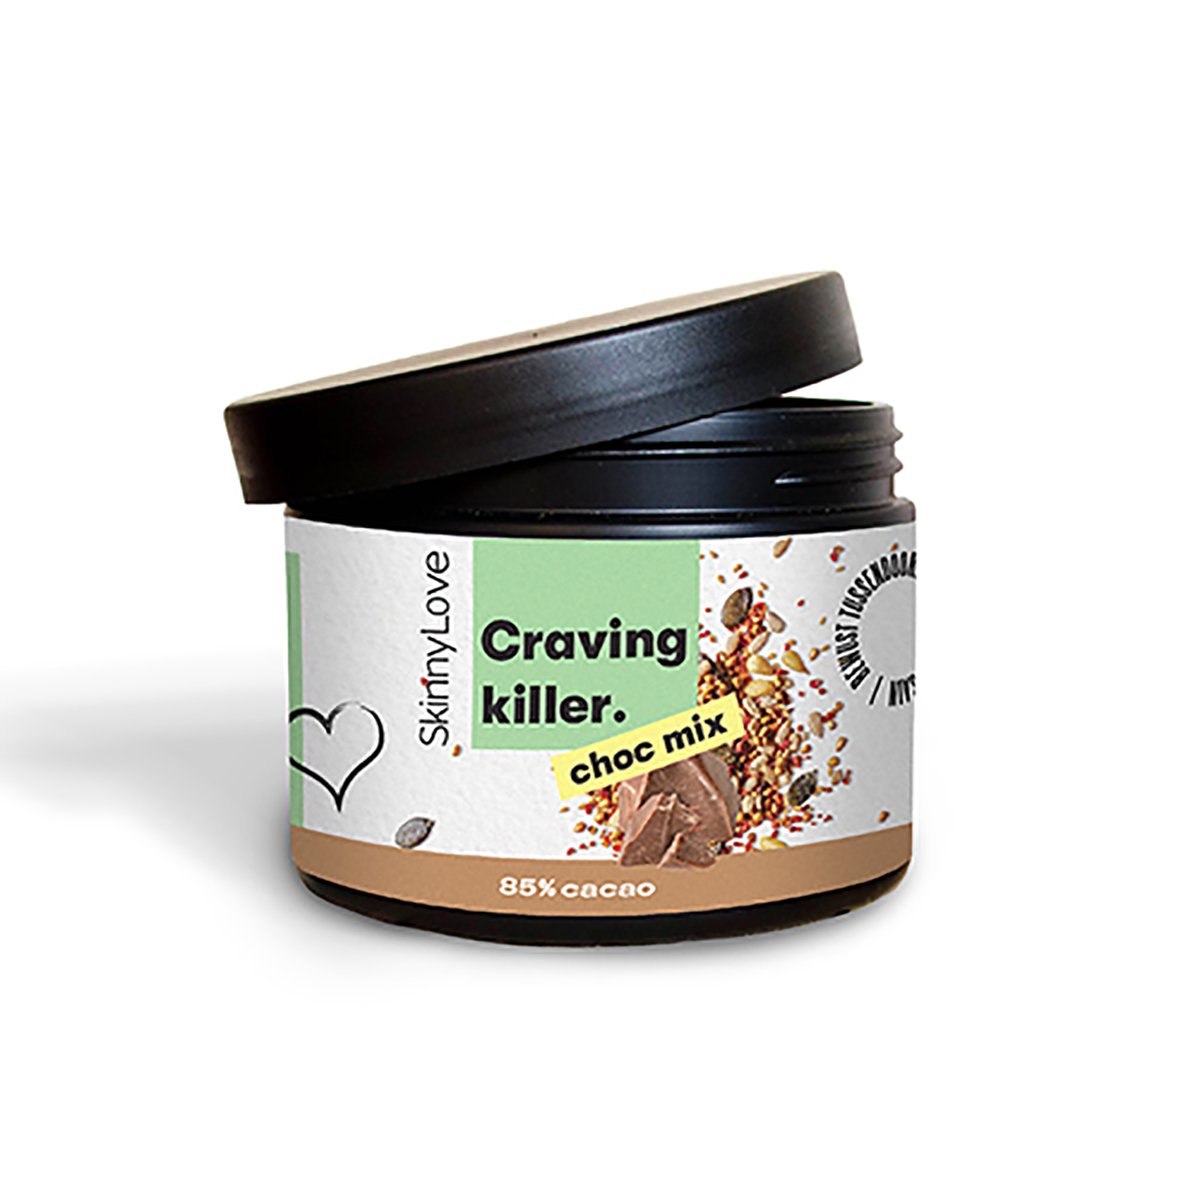 Craving killer choc mix (85% cacao-goji)